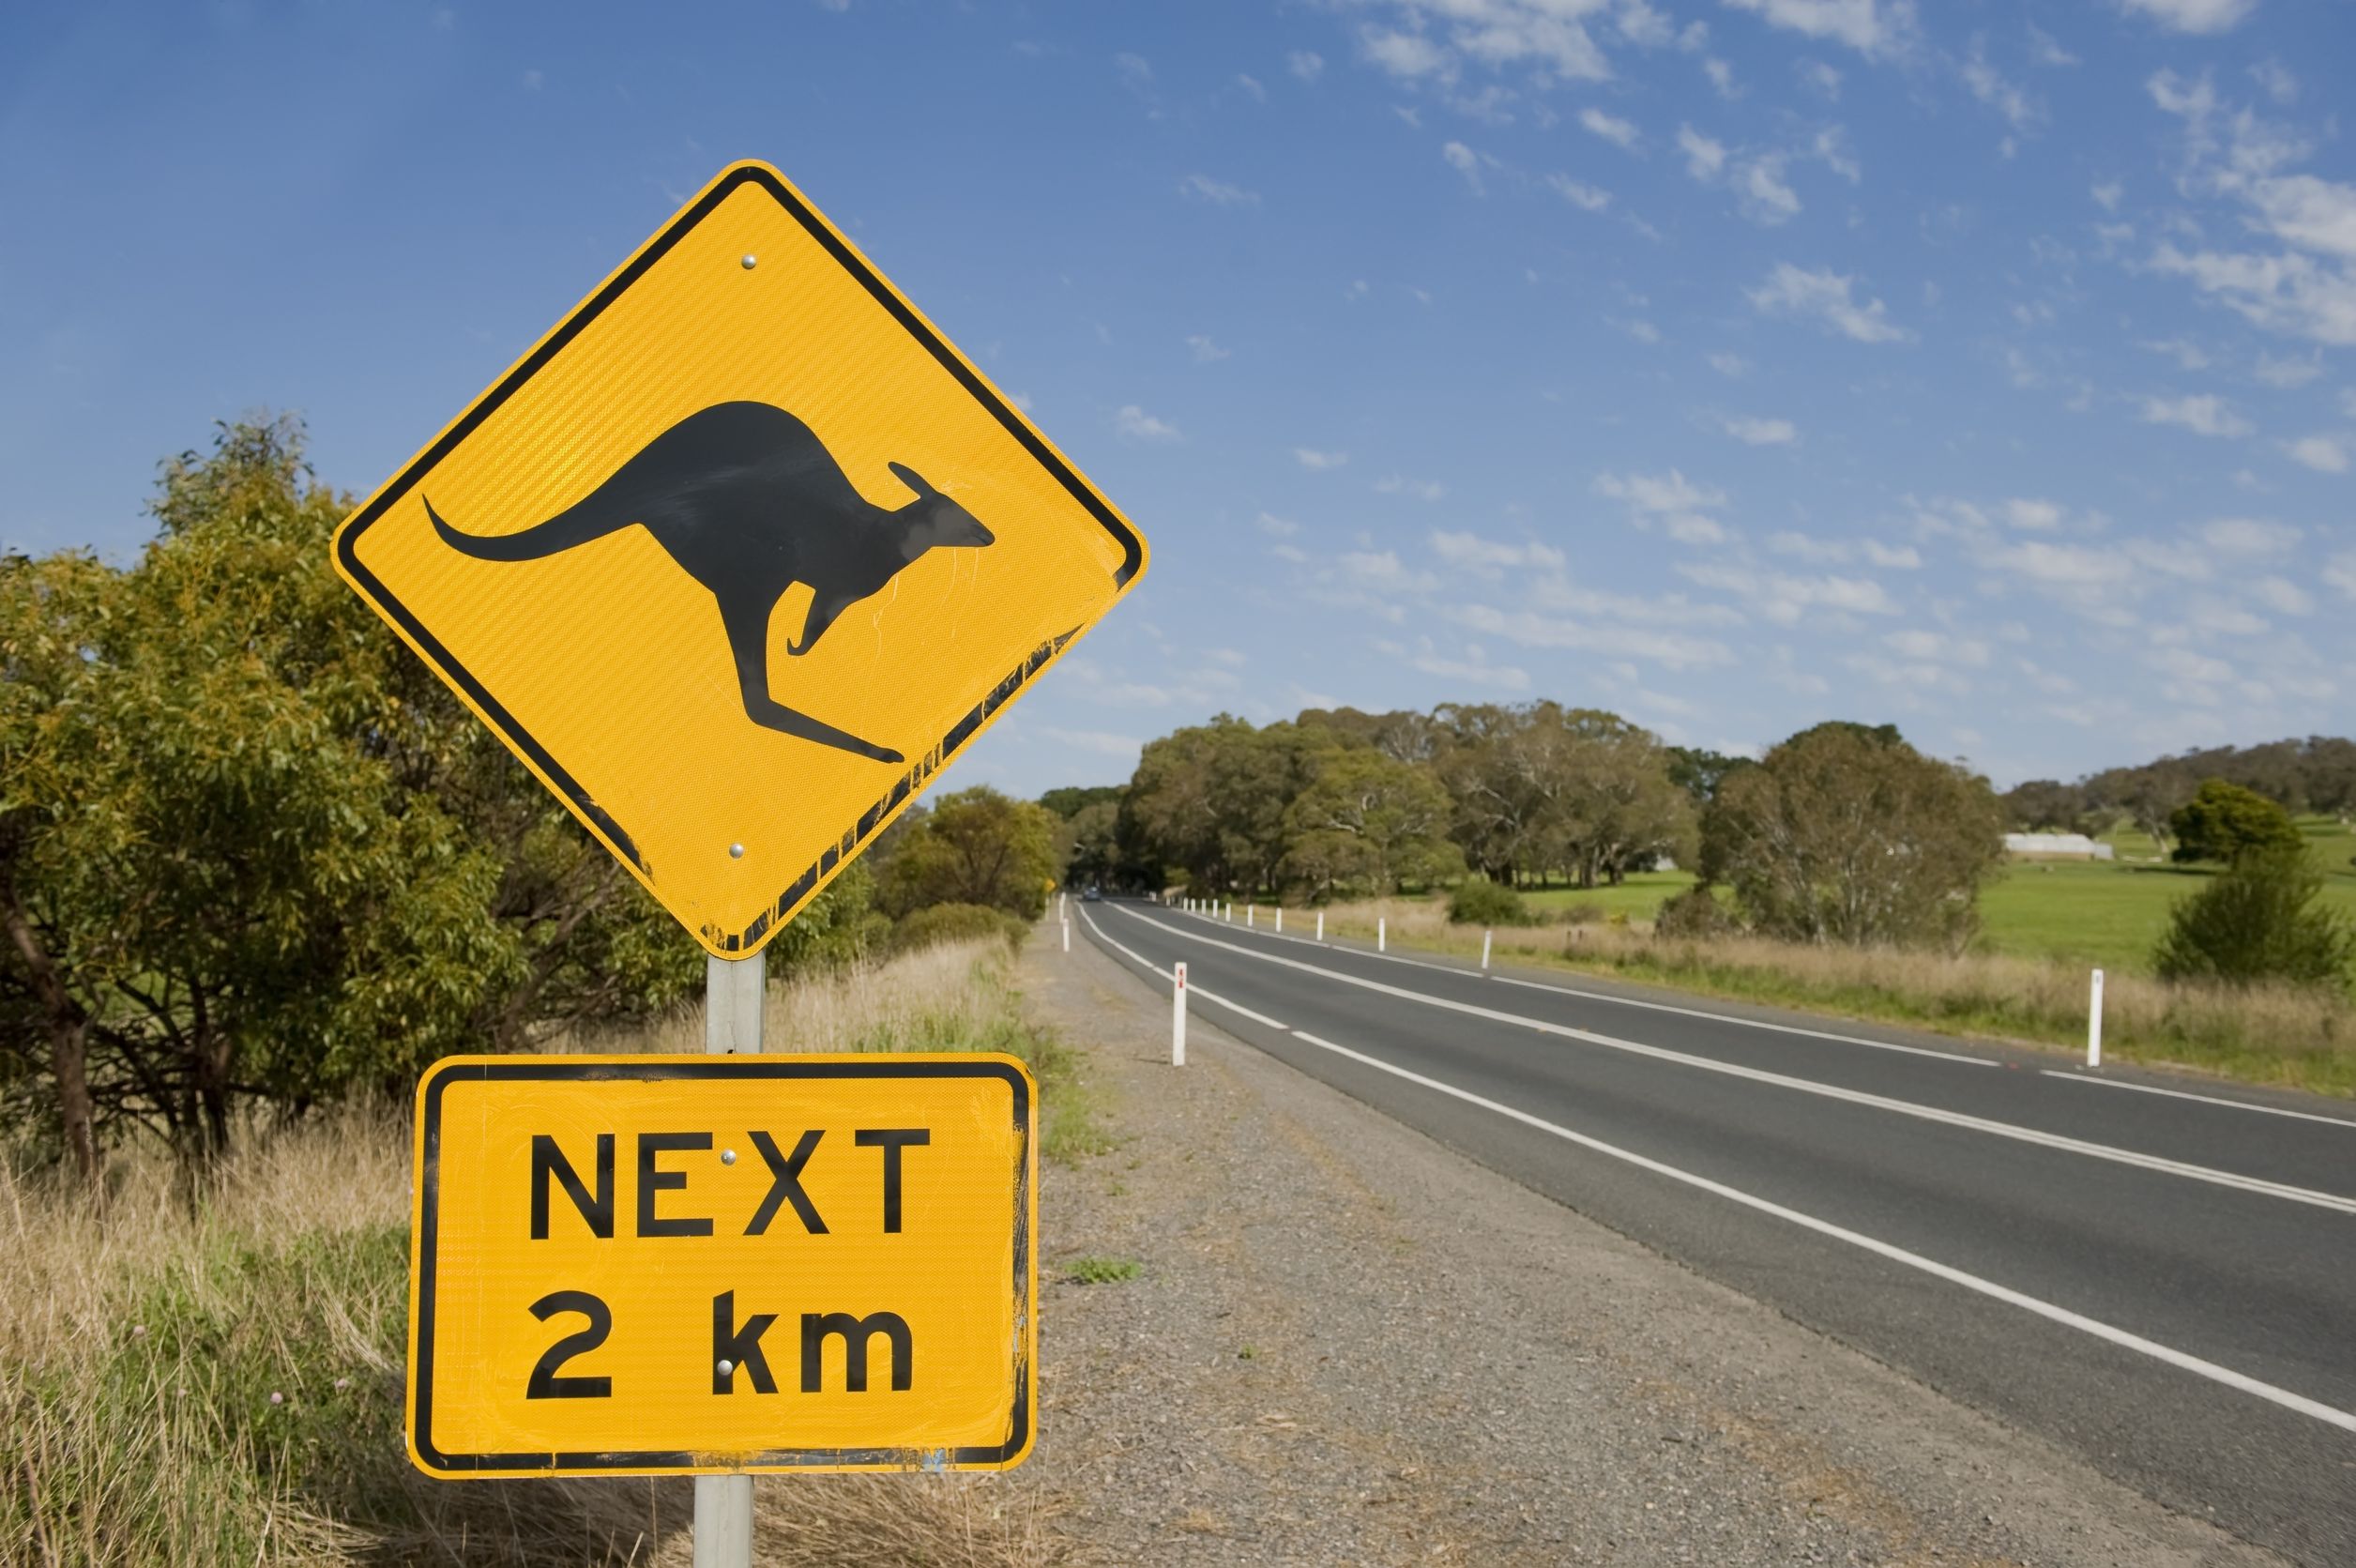 locum-101-road-signs-in-australia-global-medical-staffing-blog